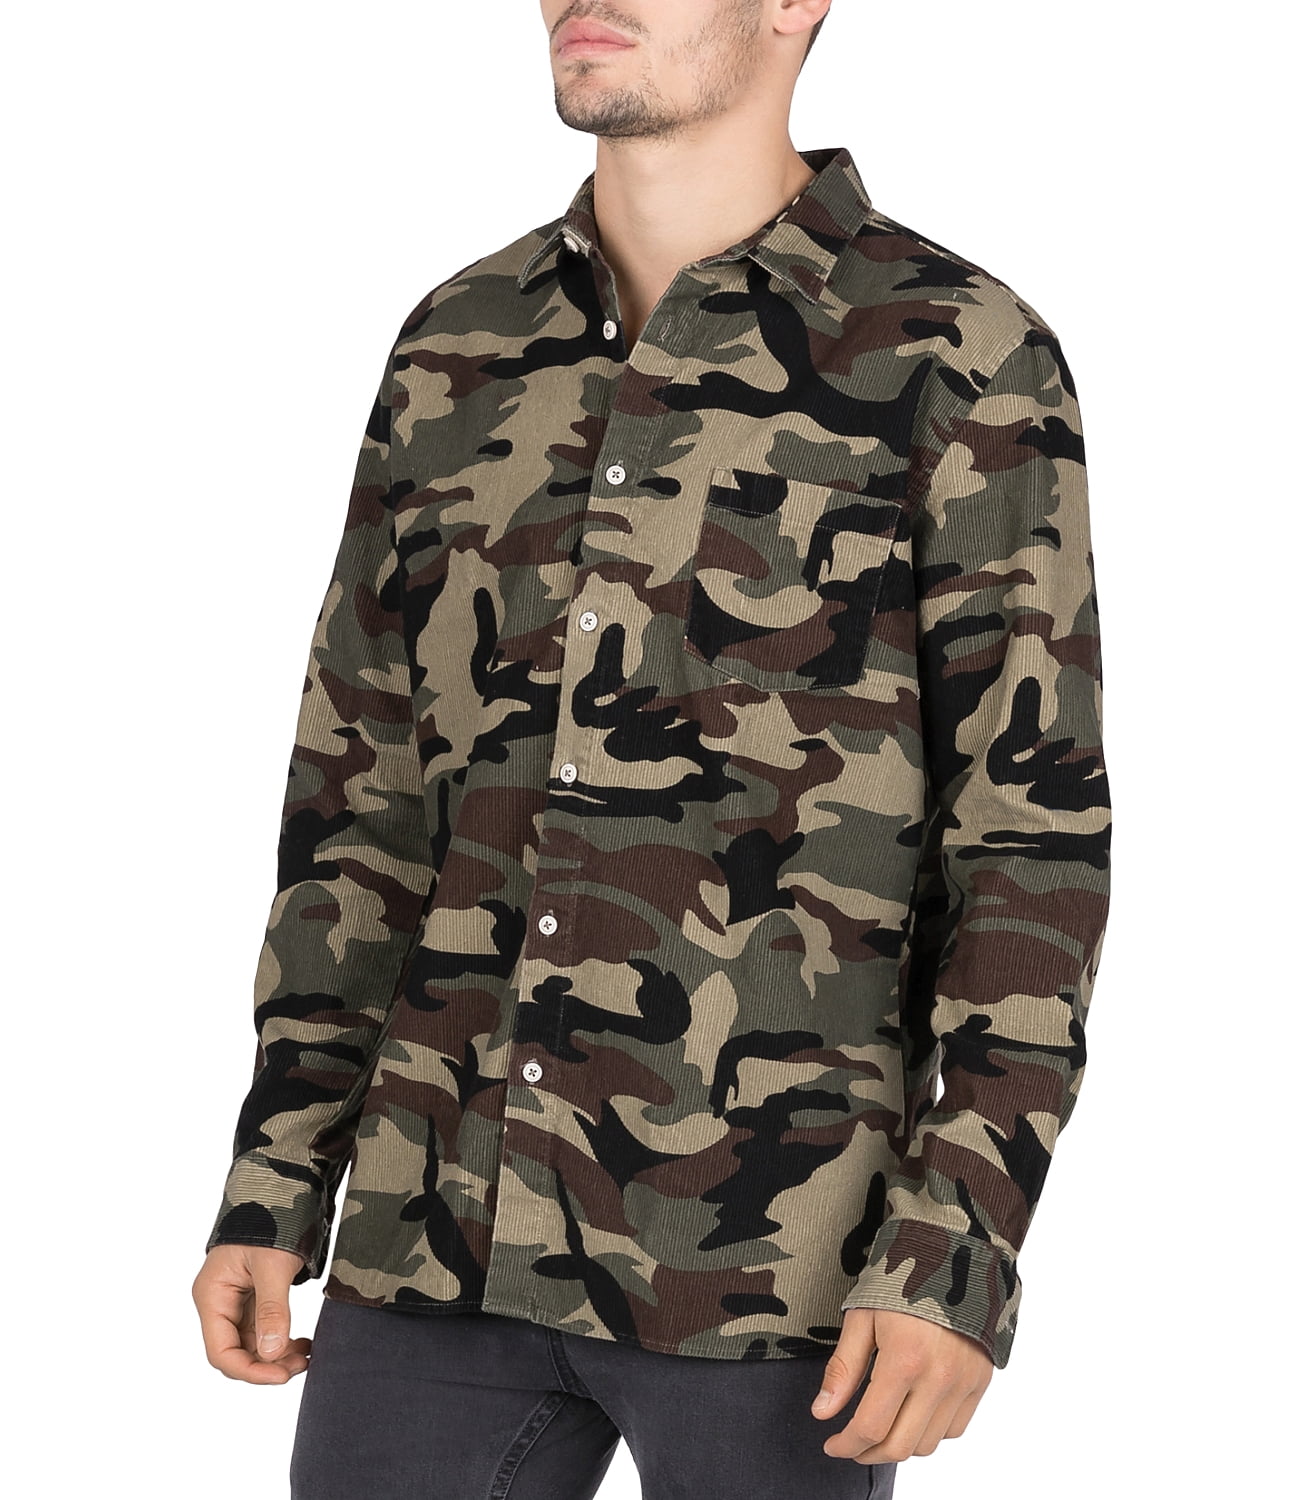 Barney Cools - Mens Shirt Medium Button Down Camouflage M - Walmart.com ...